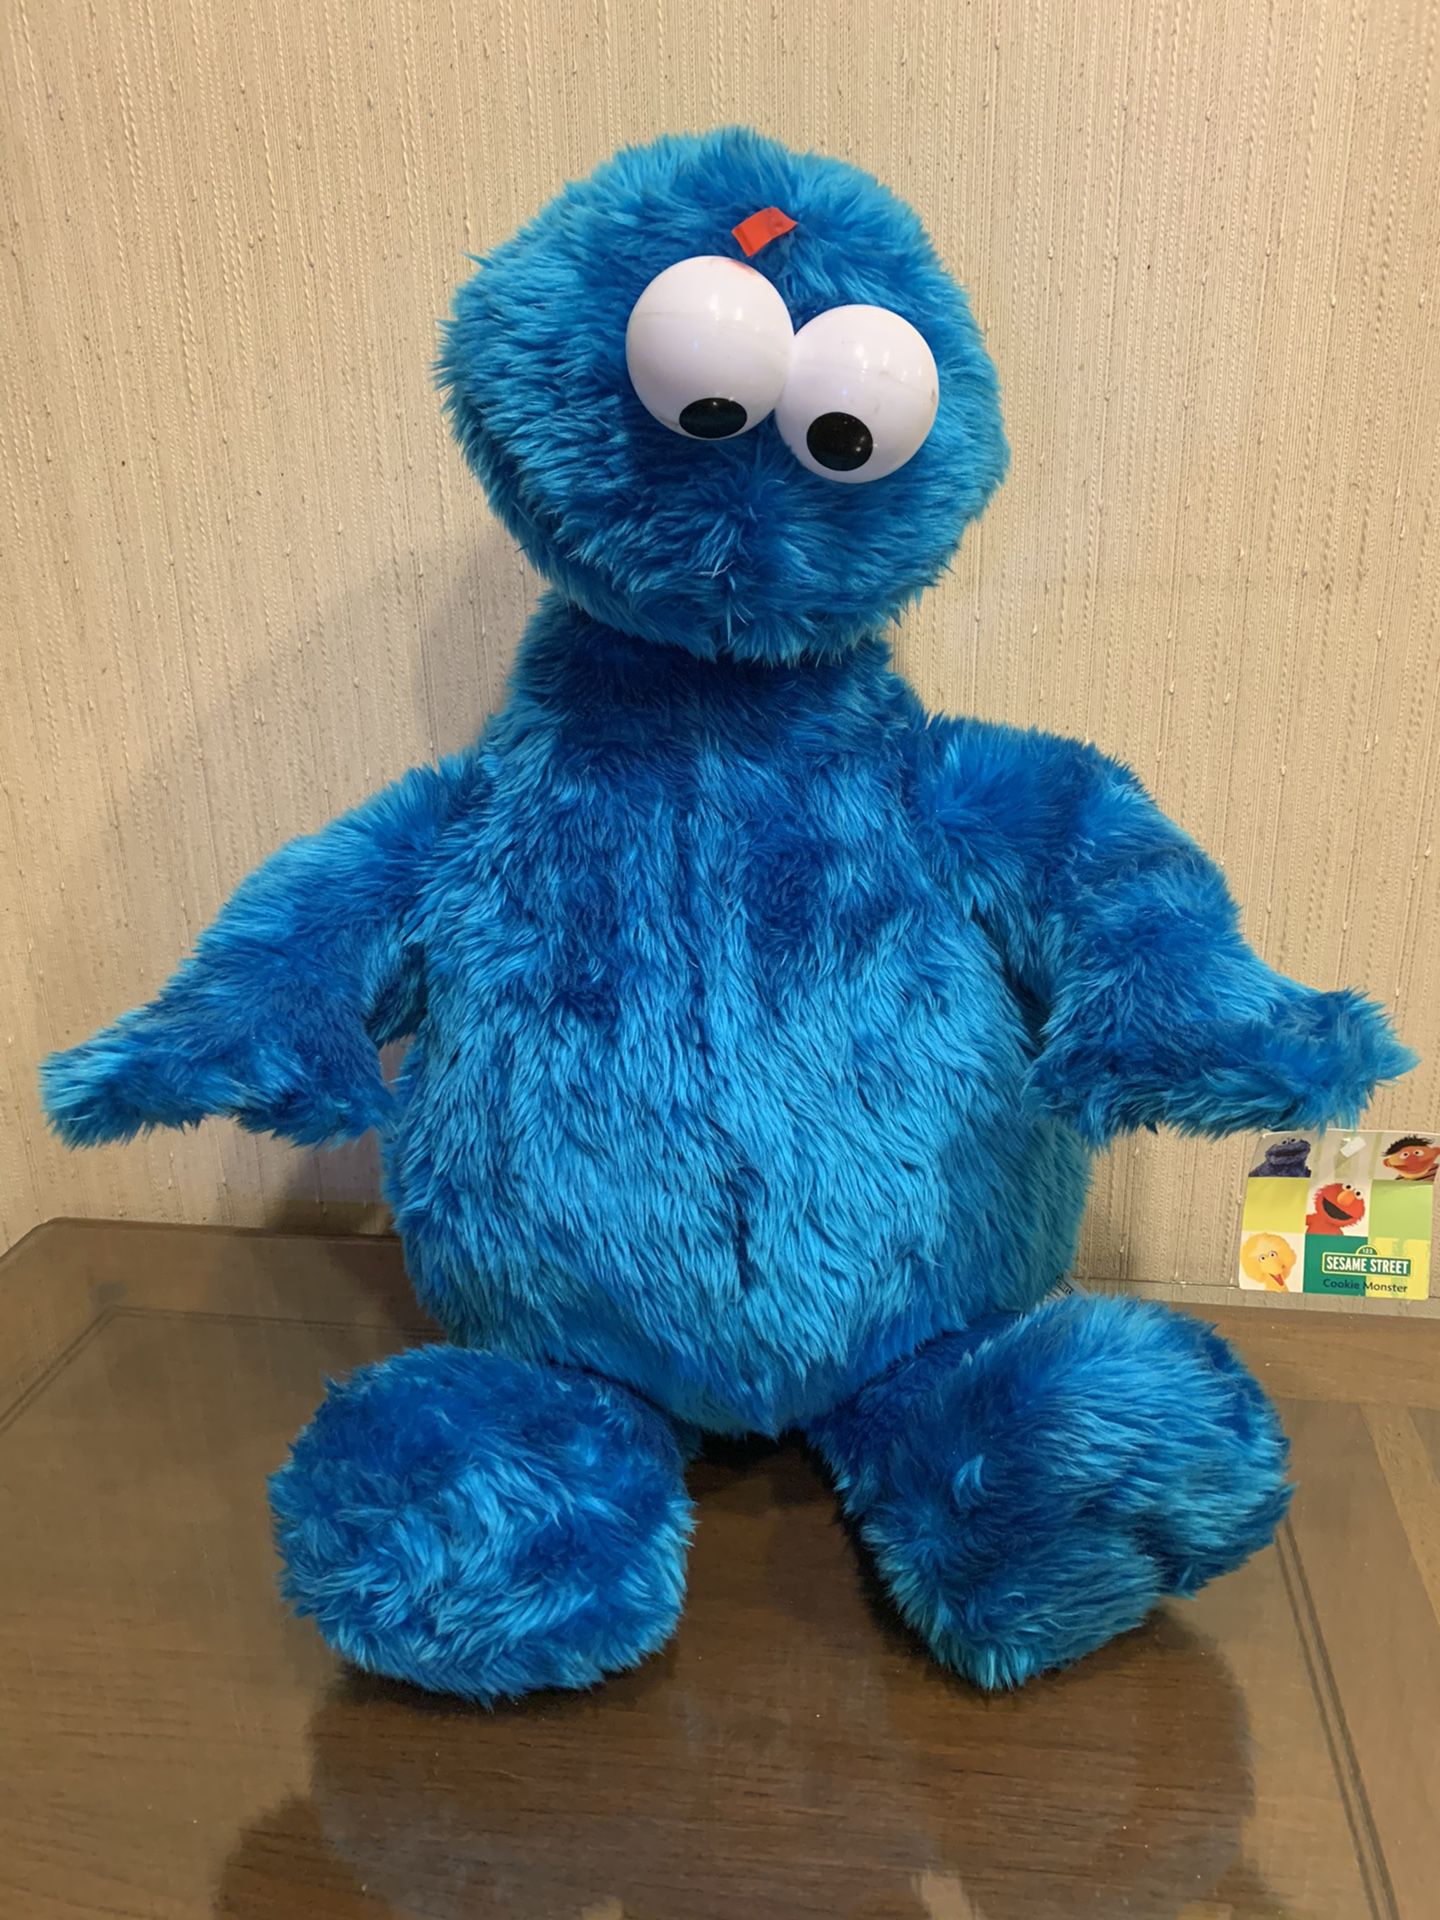 Cookie Monster Plush Animal New